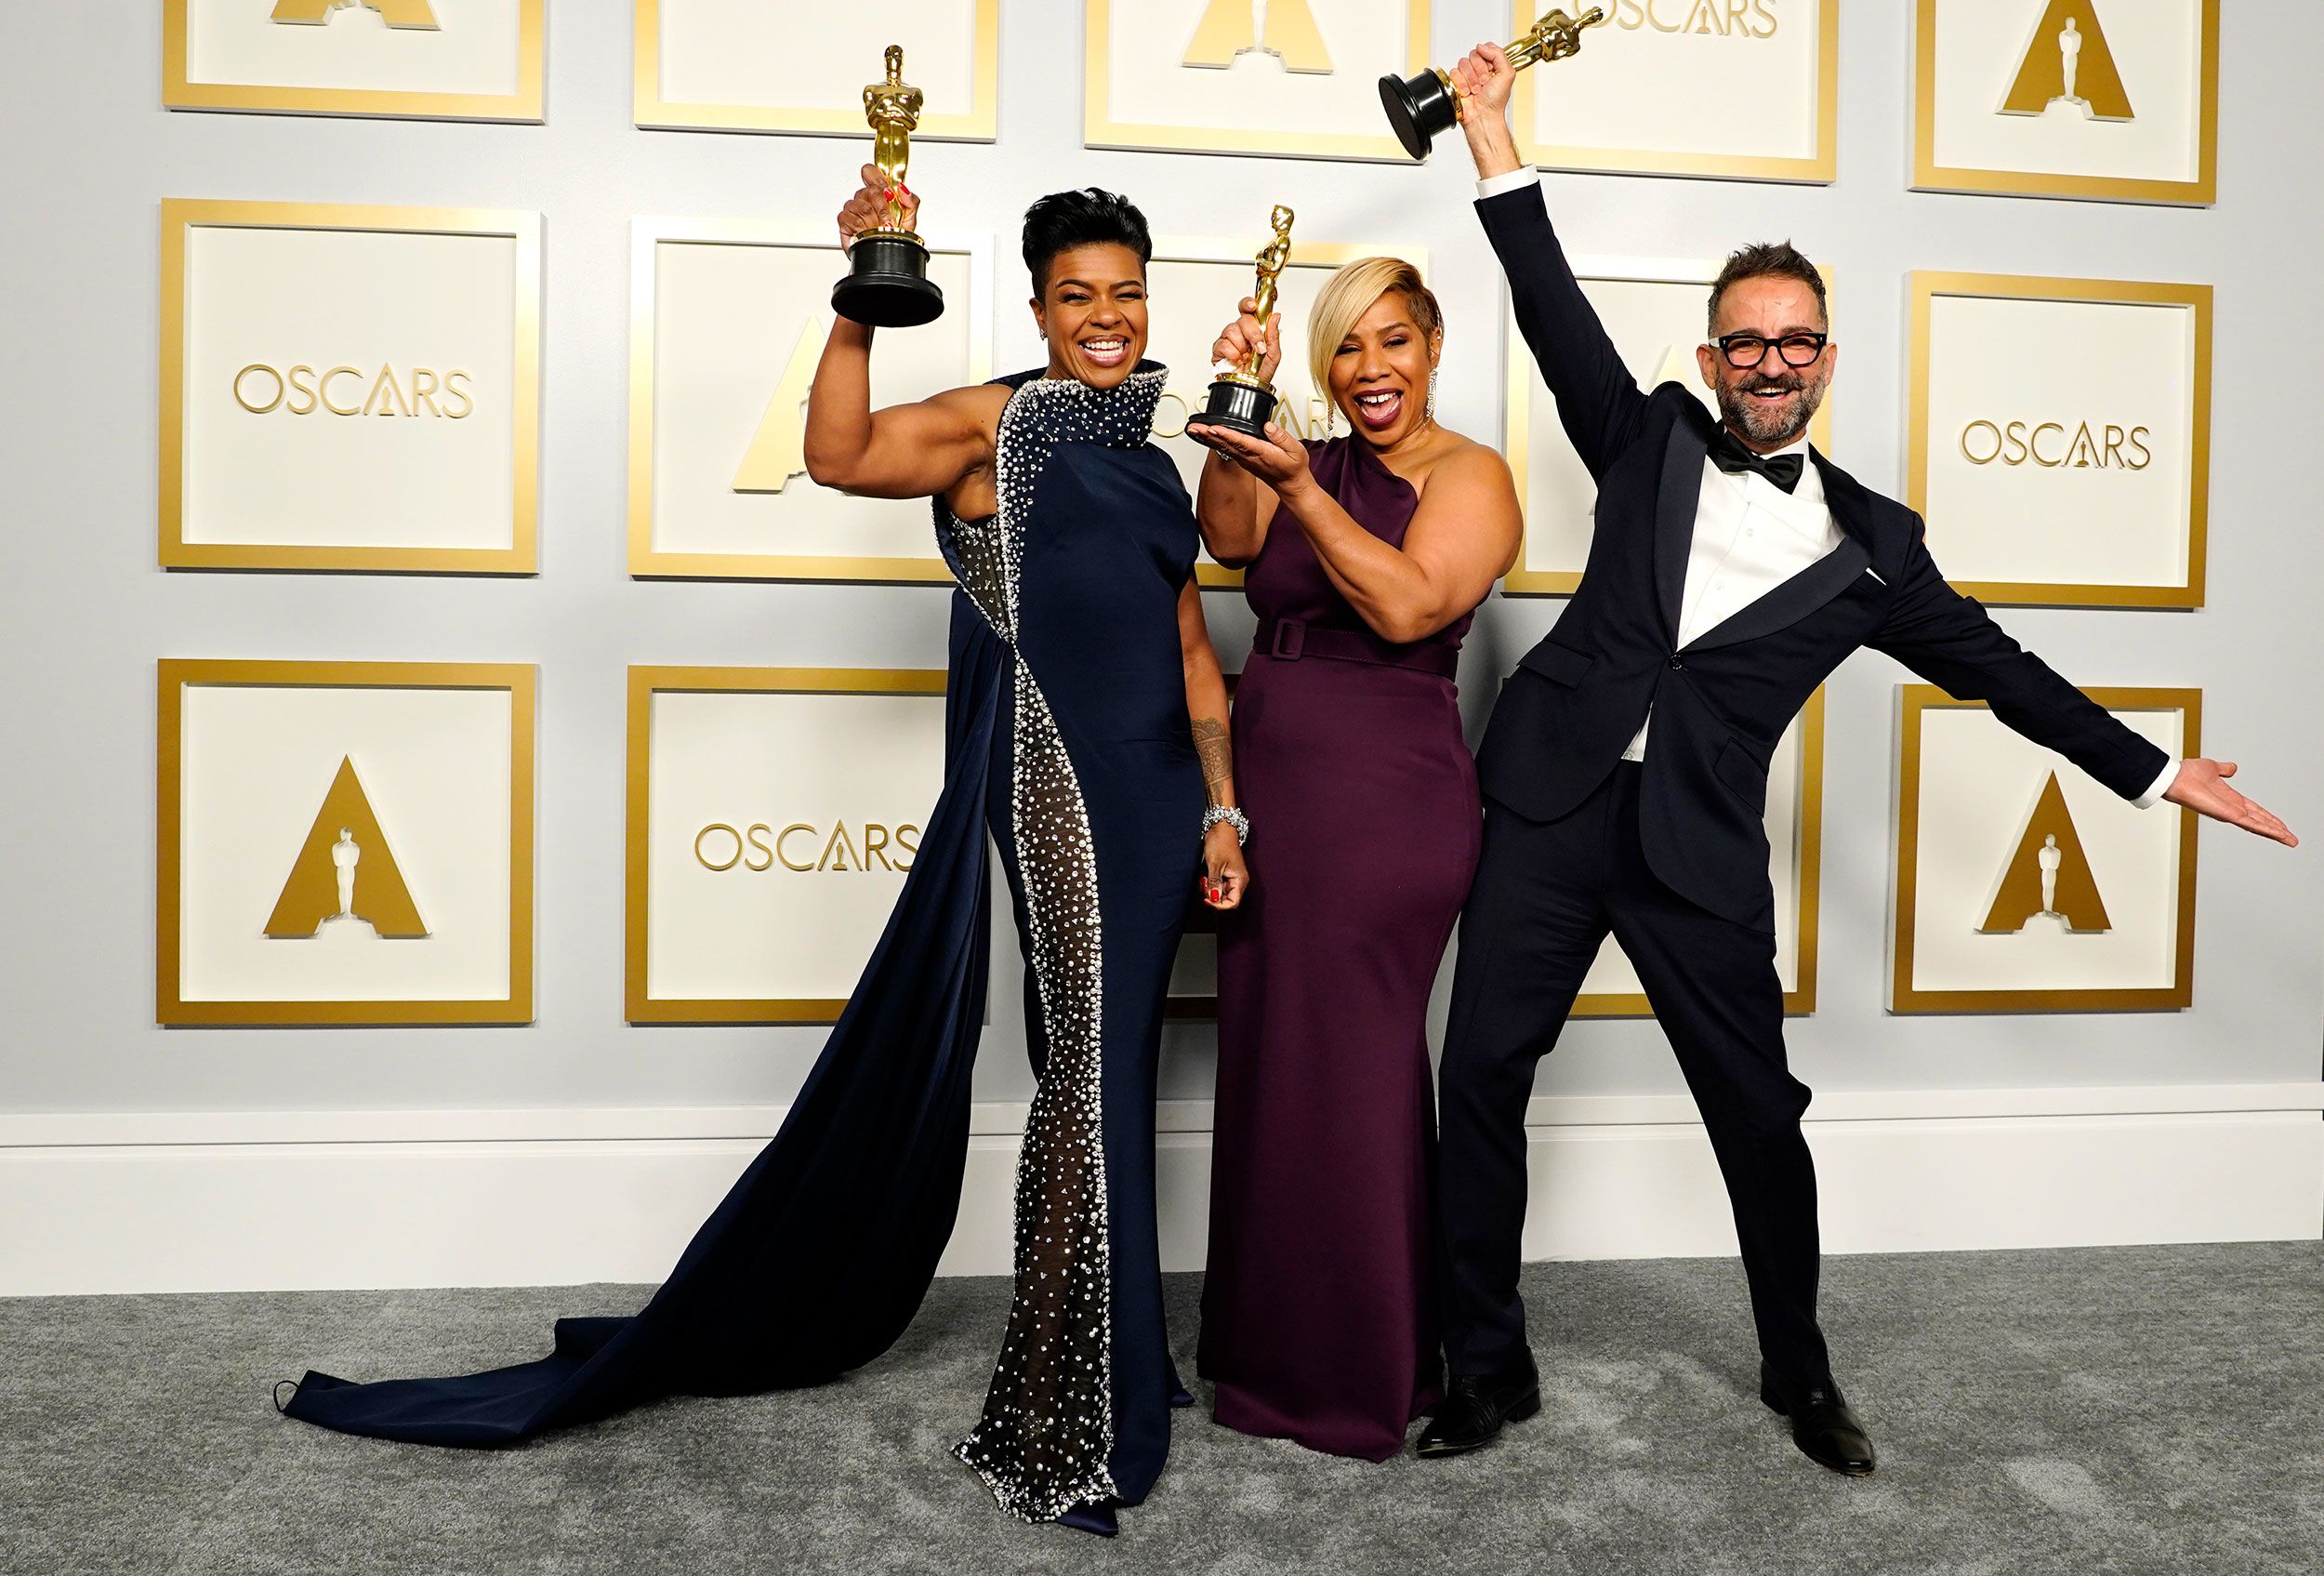 2021 Oscars Photos, News, Videos and Gallery